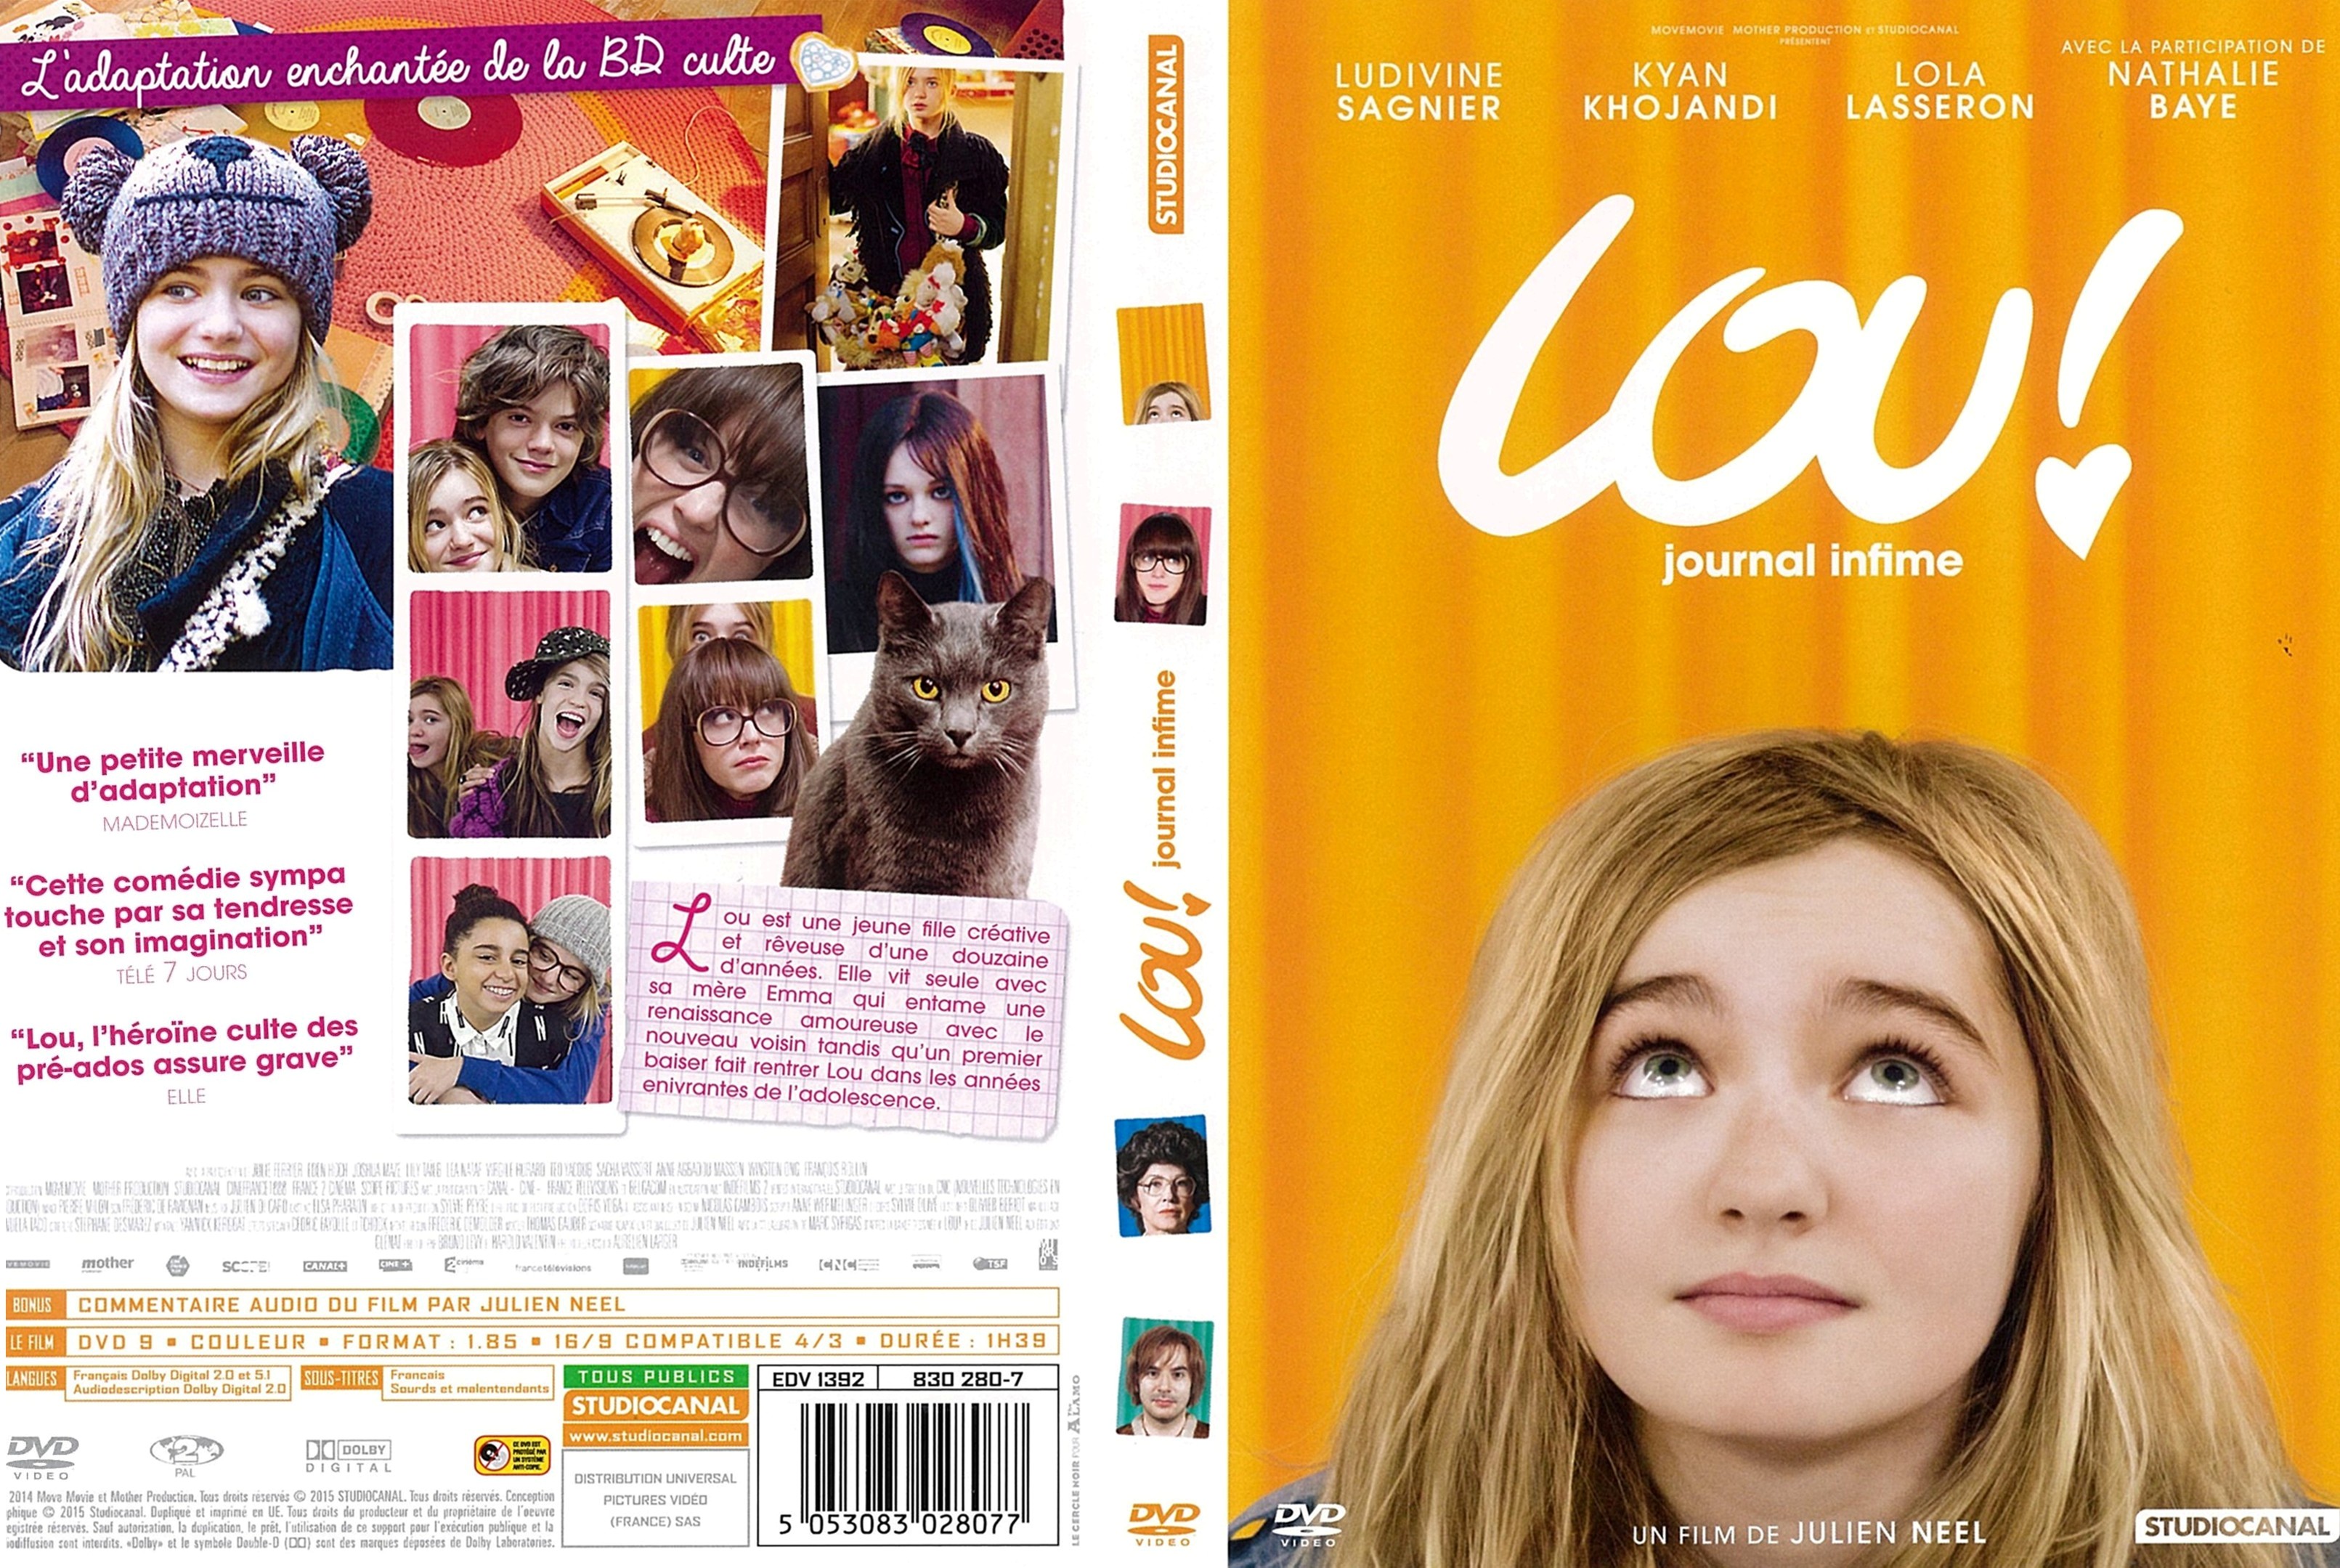 Jaquette DVD Lou ! Journal infime